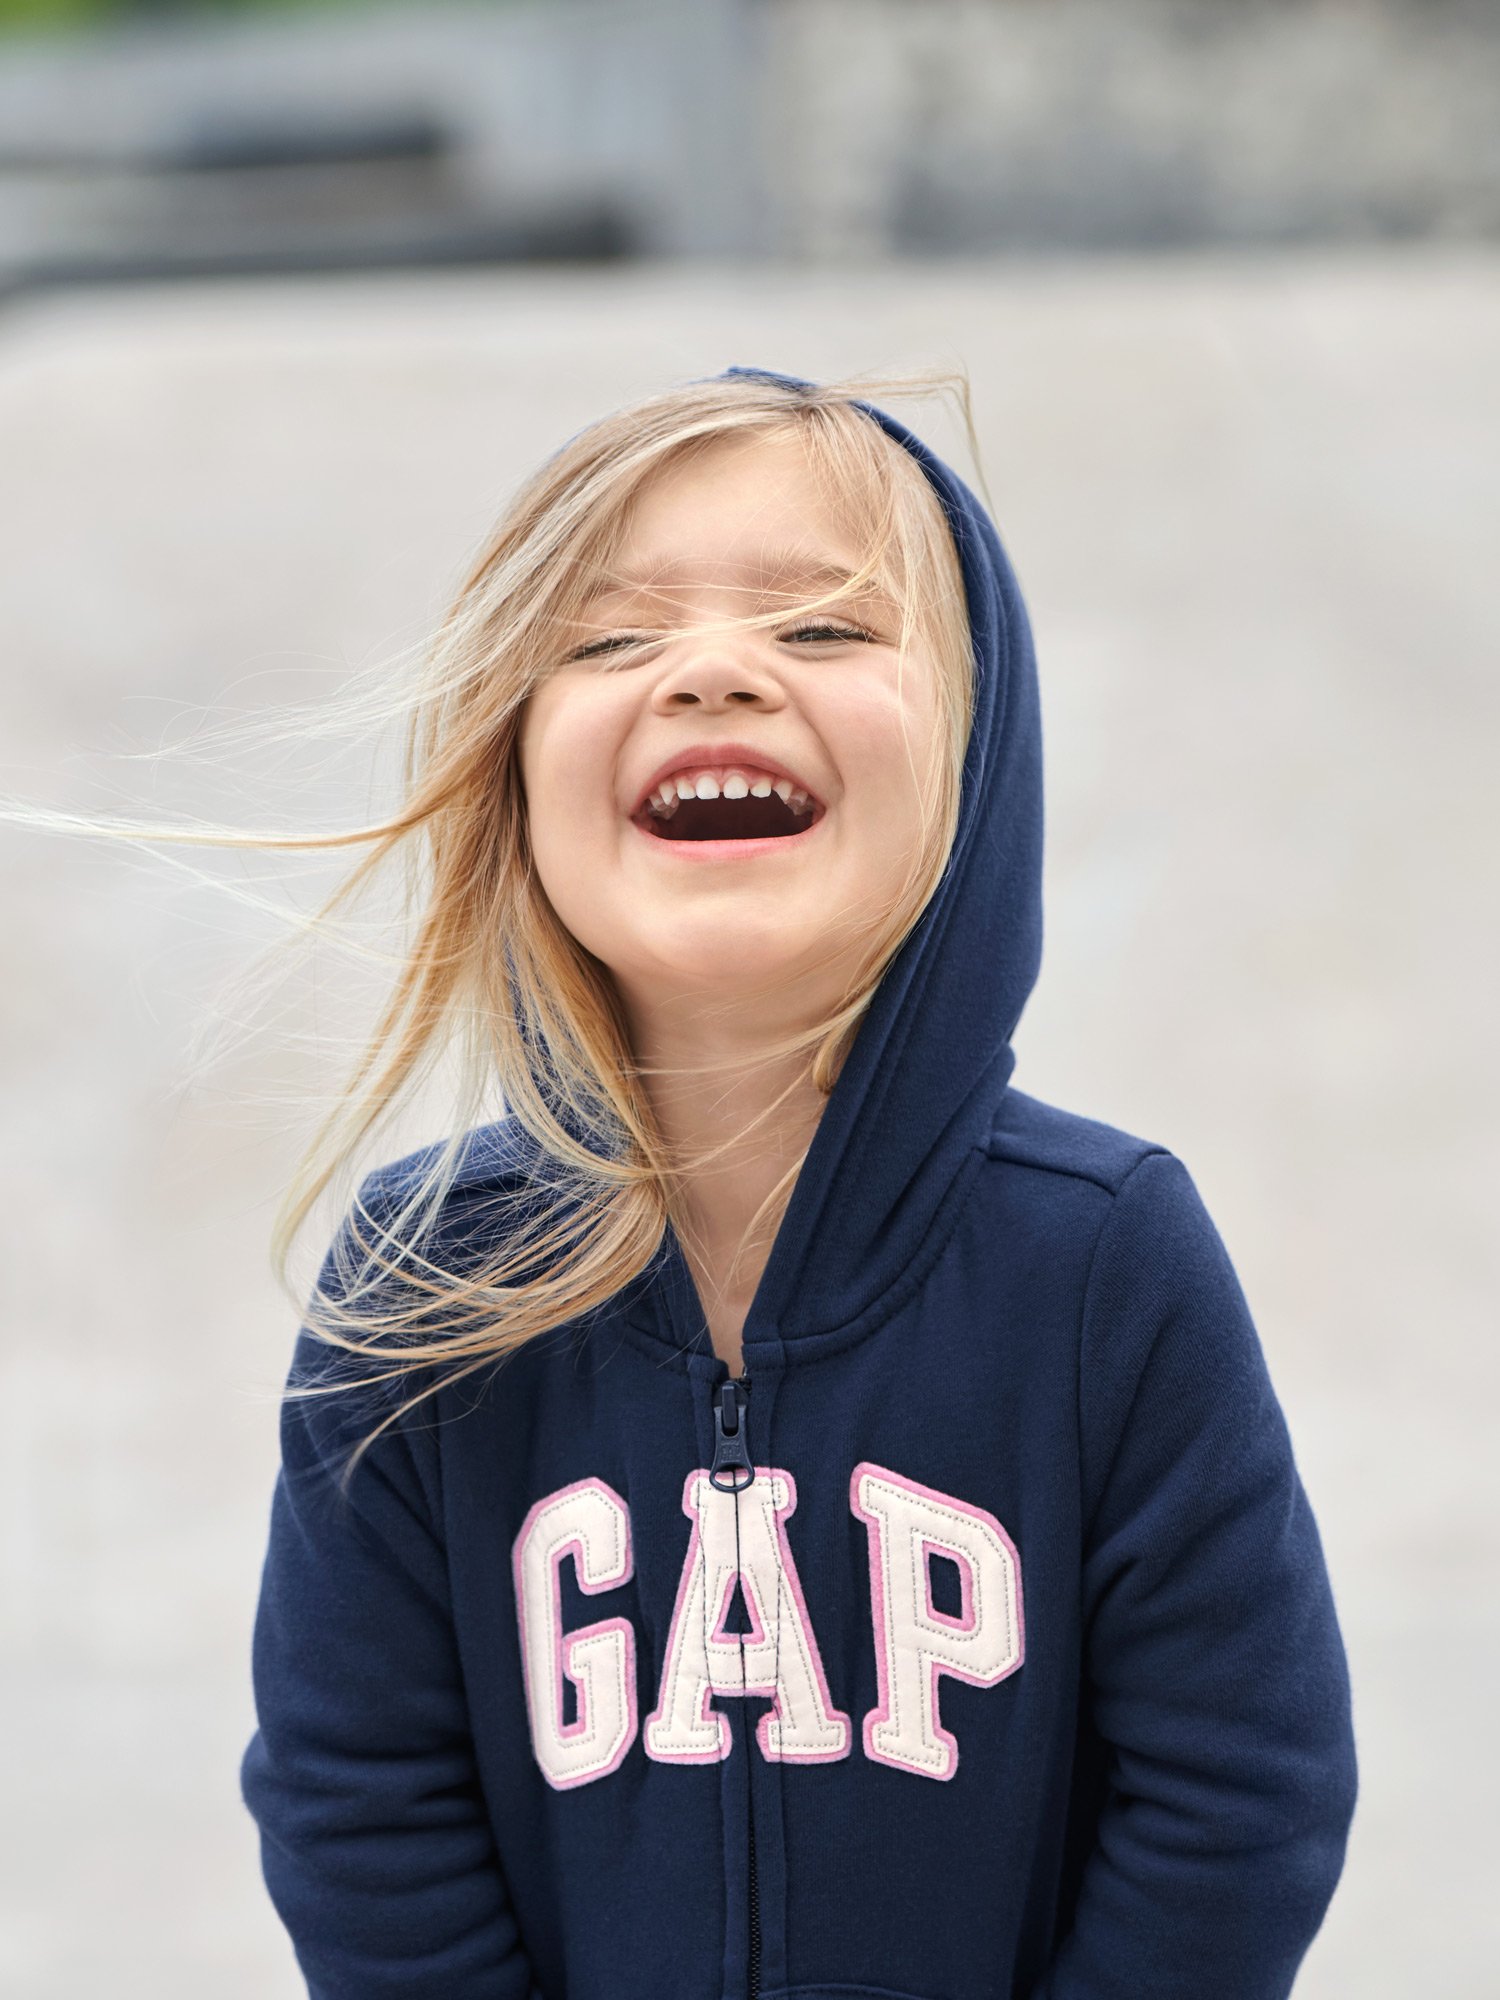 Gap Logo Kapüşonlu Fleece Sweatshirt product image